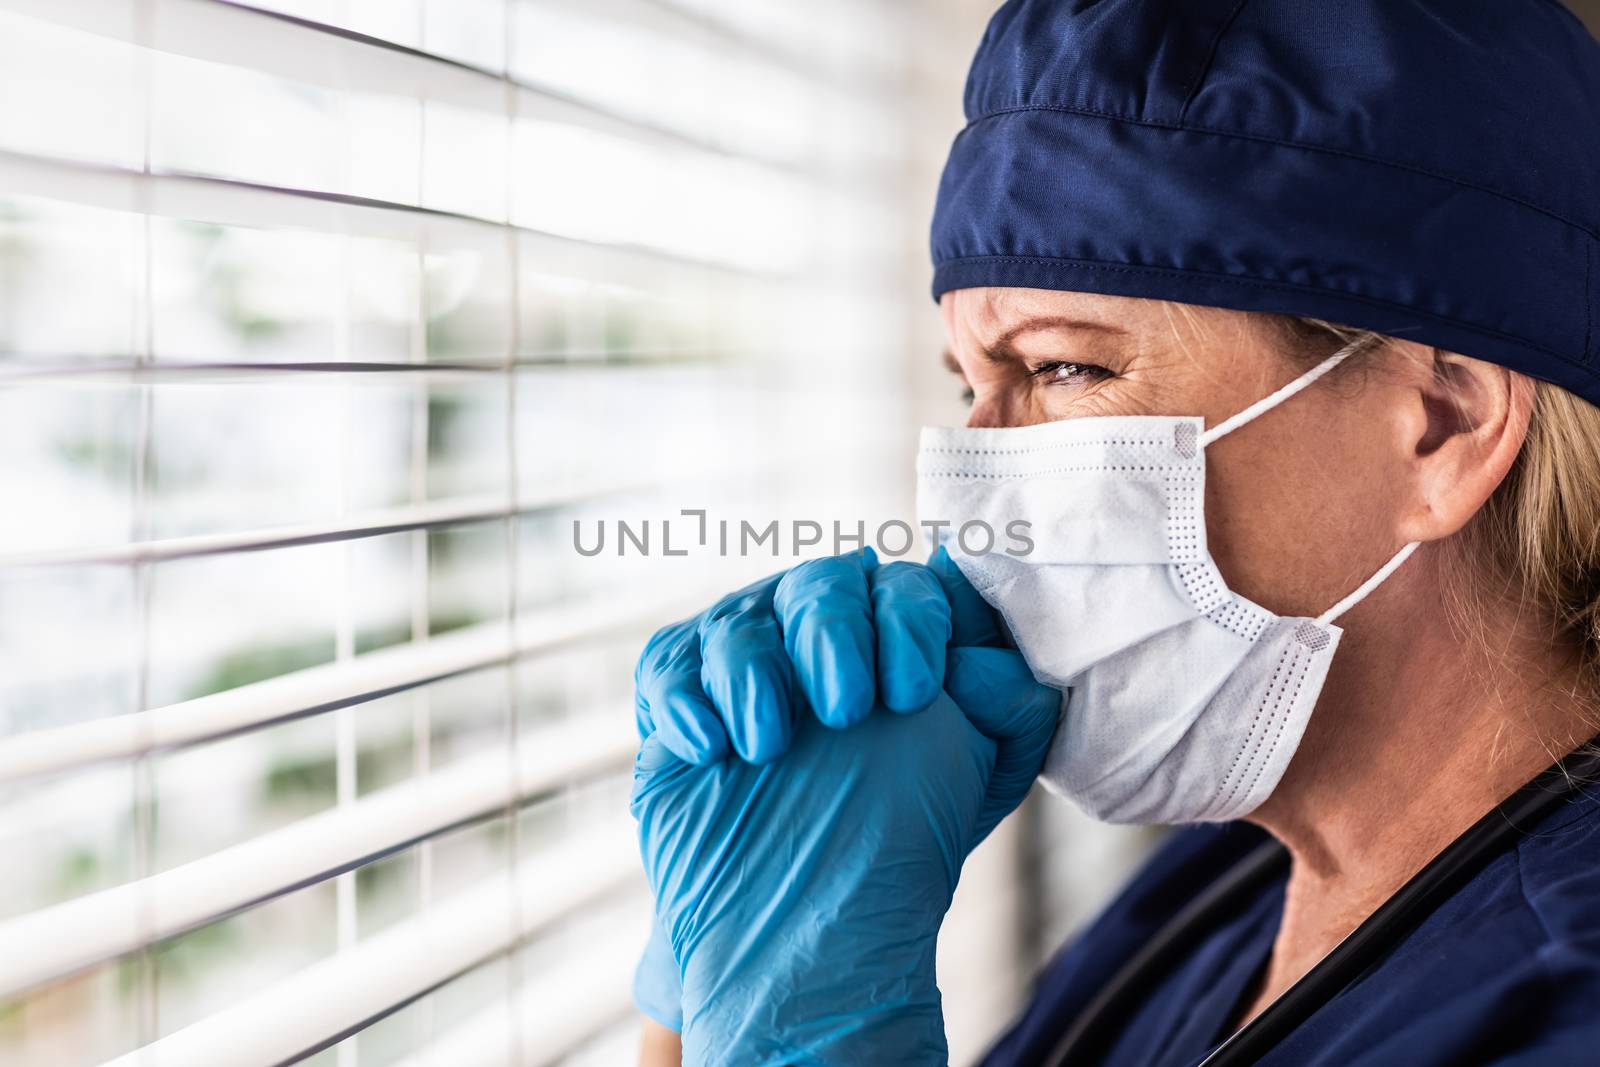 Prayerful Stressed Female Doctor or Nurse On Break At Window Wearing Medical Face Mask.